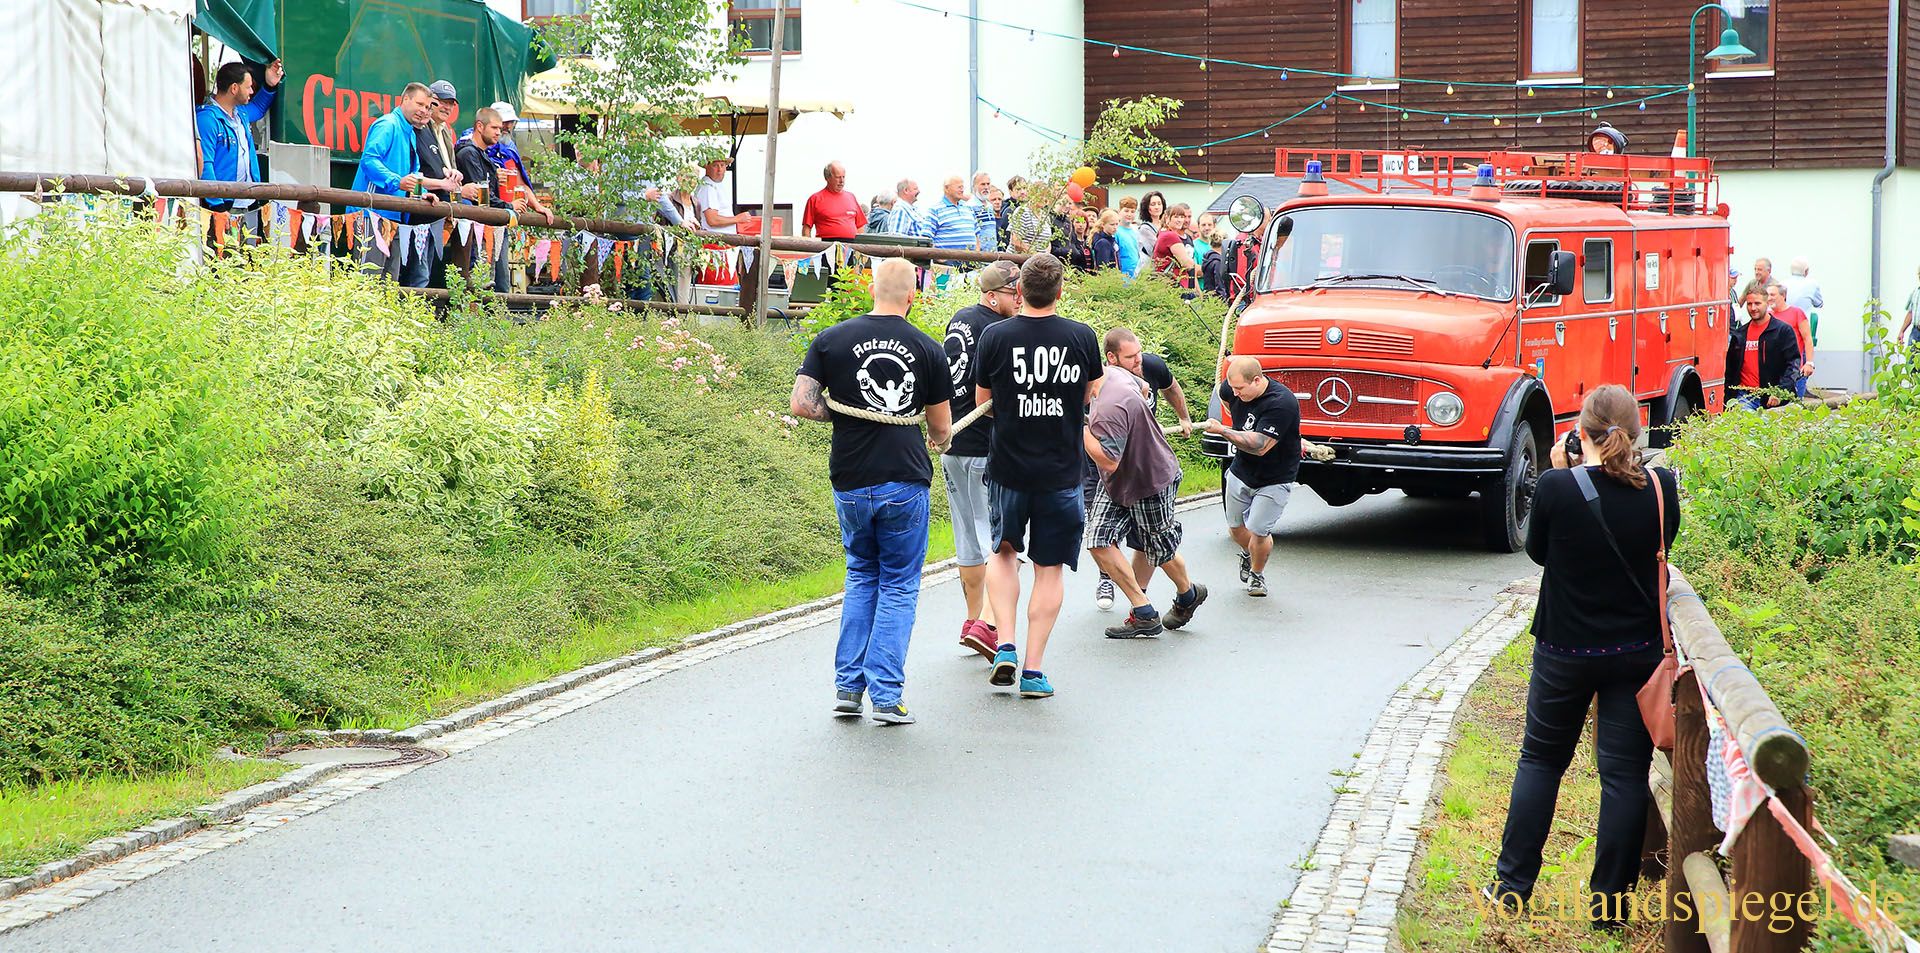 Gaudiwettkampf: Feuerwehrauto-Weitziehen in Daßlitz